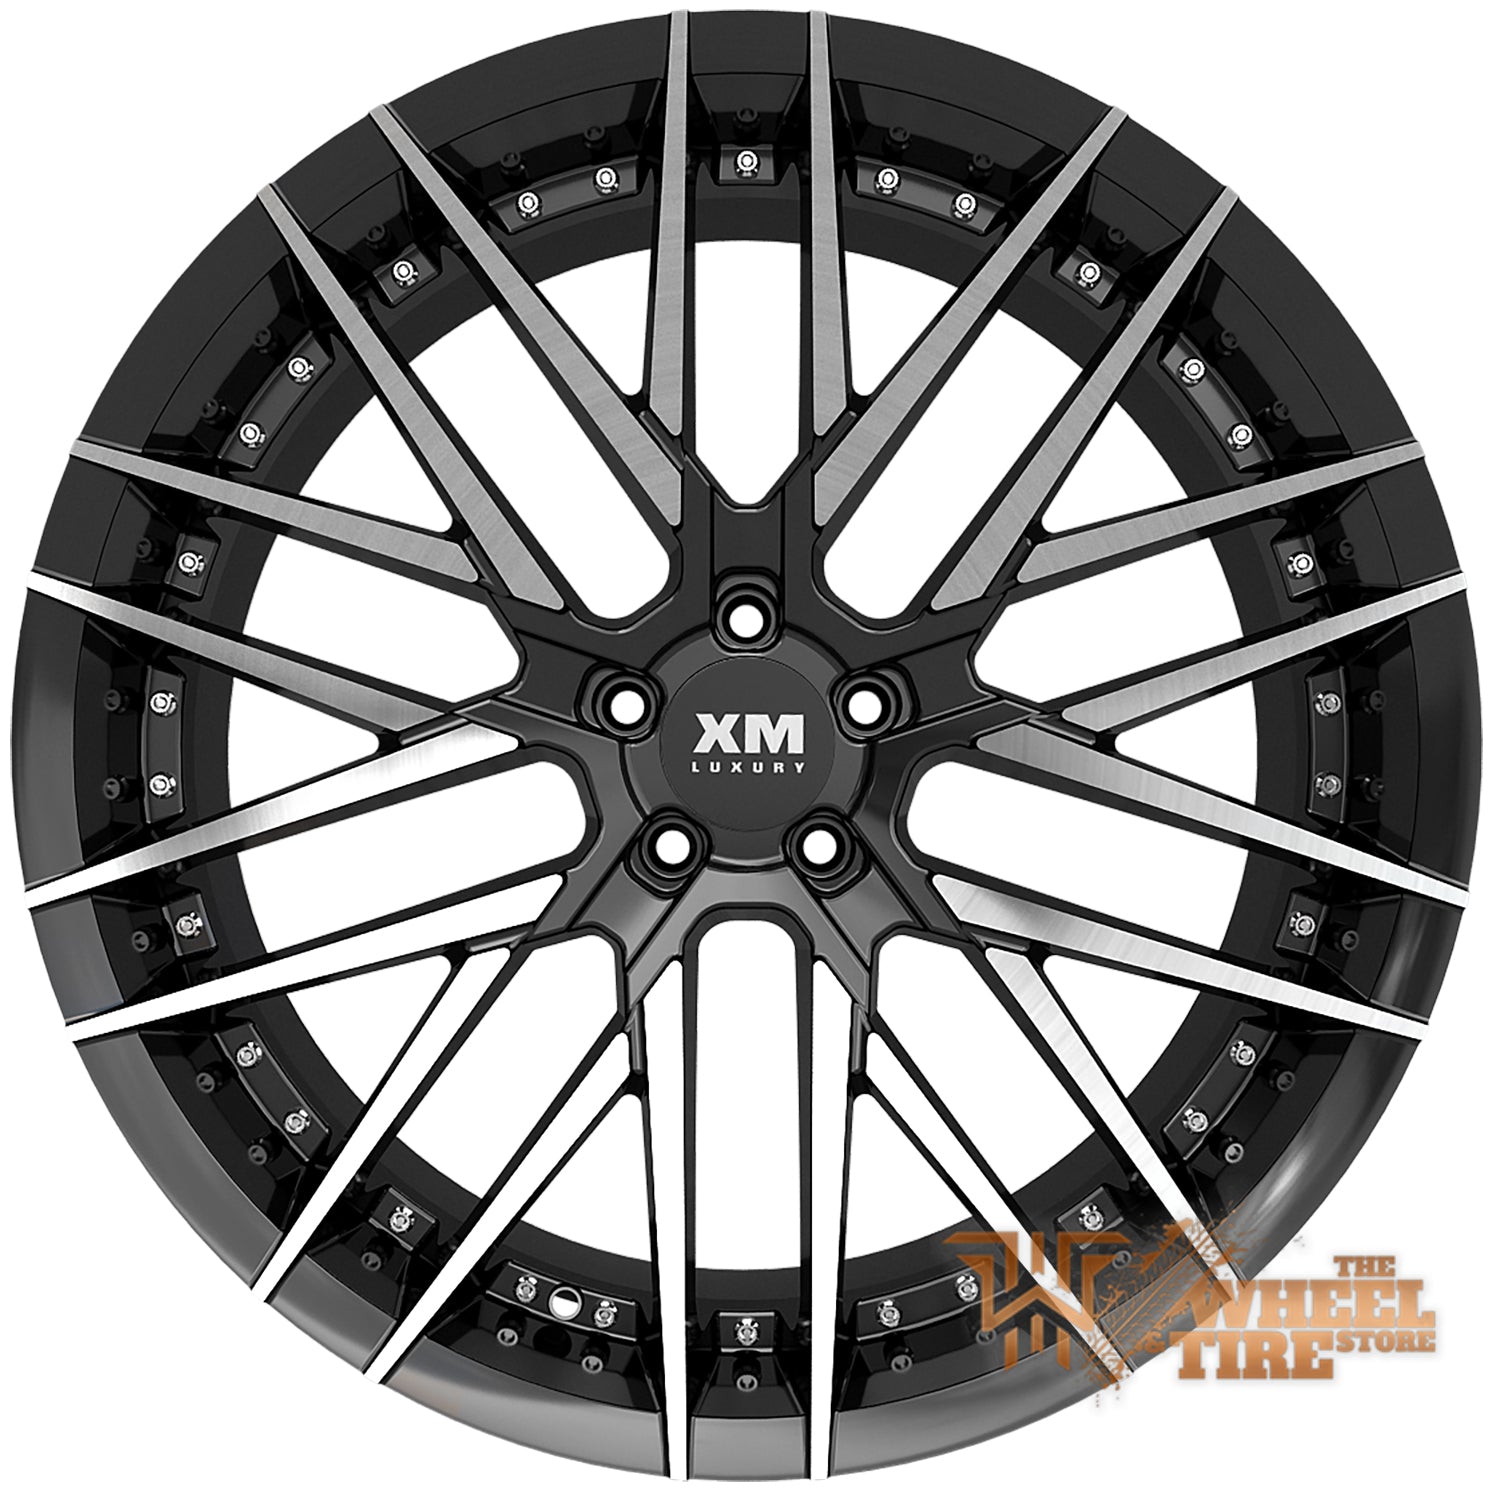 XM LUXURY XM-203 Wheel in Black Machined Face (Set of 4)